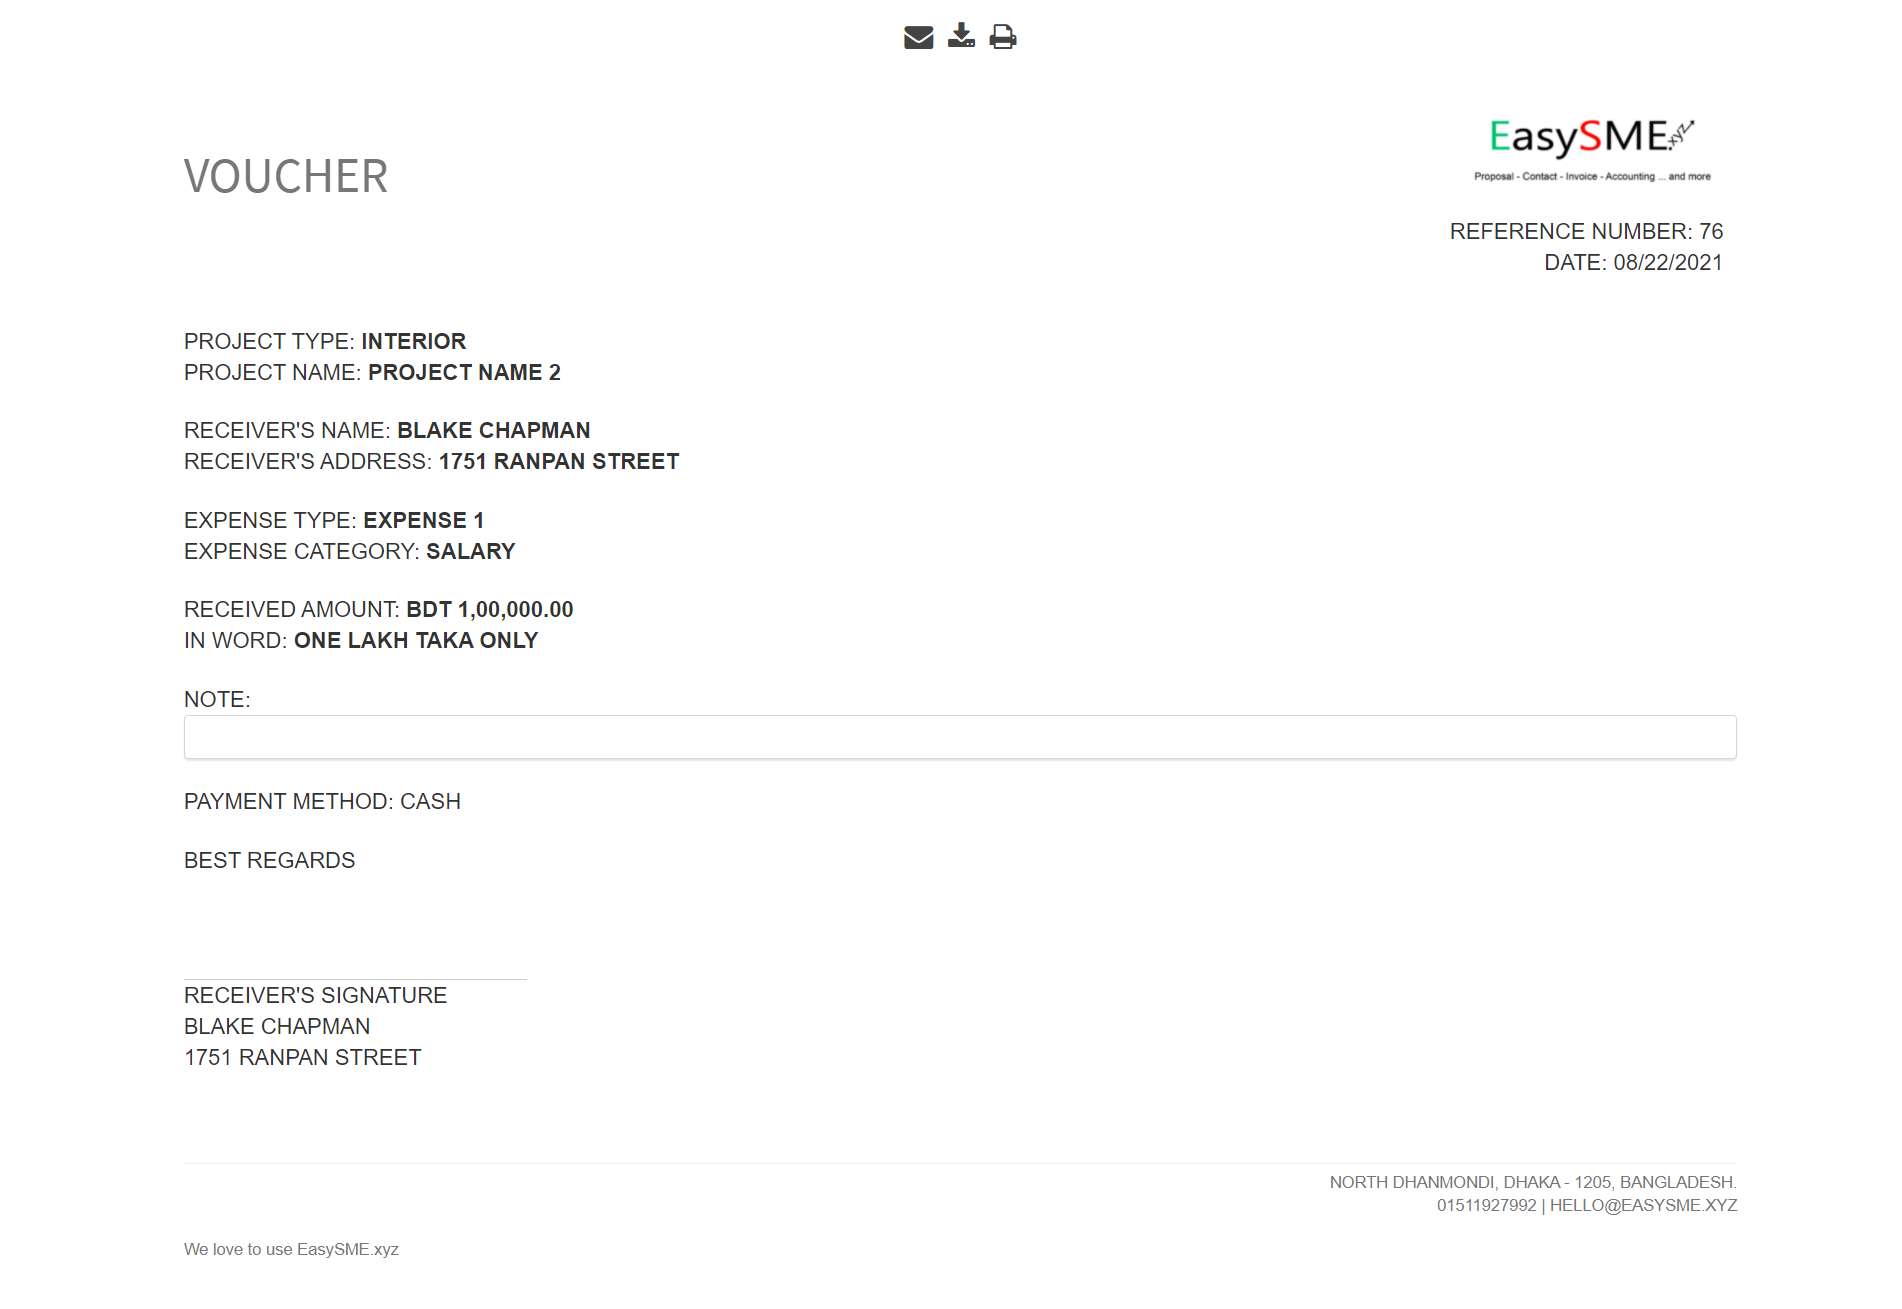 EasySME - Voucher print and pdf view.